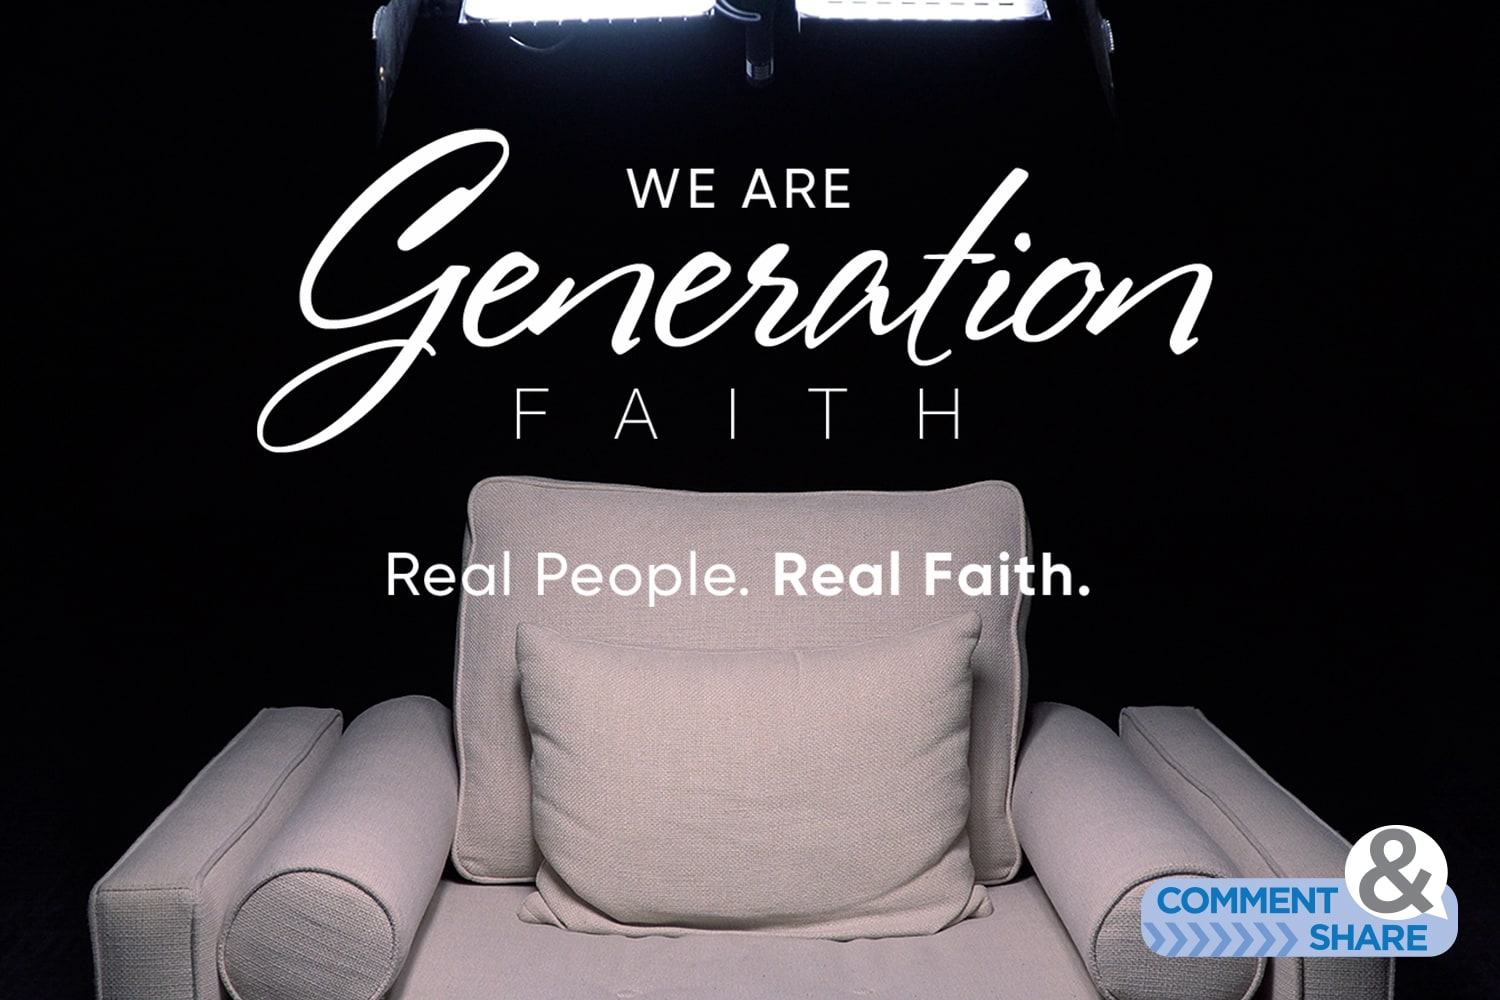 We are Generation Faith